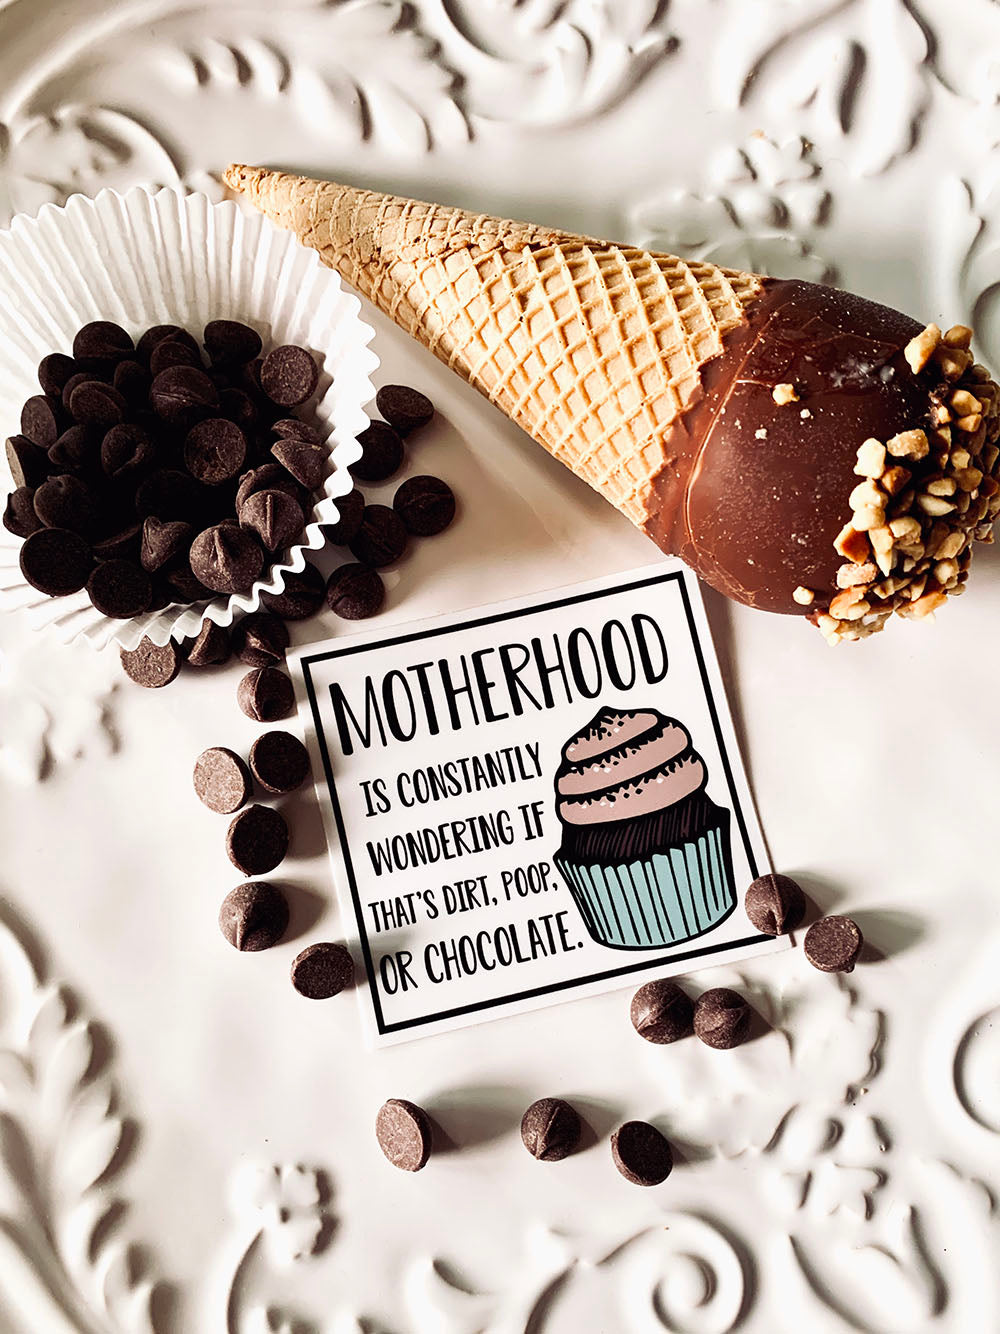 Motherhood is constantly wondering if that's dirt, poop, or chocolate vinyl sticker